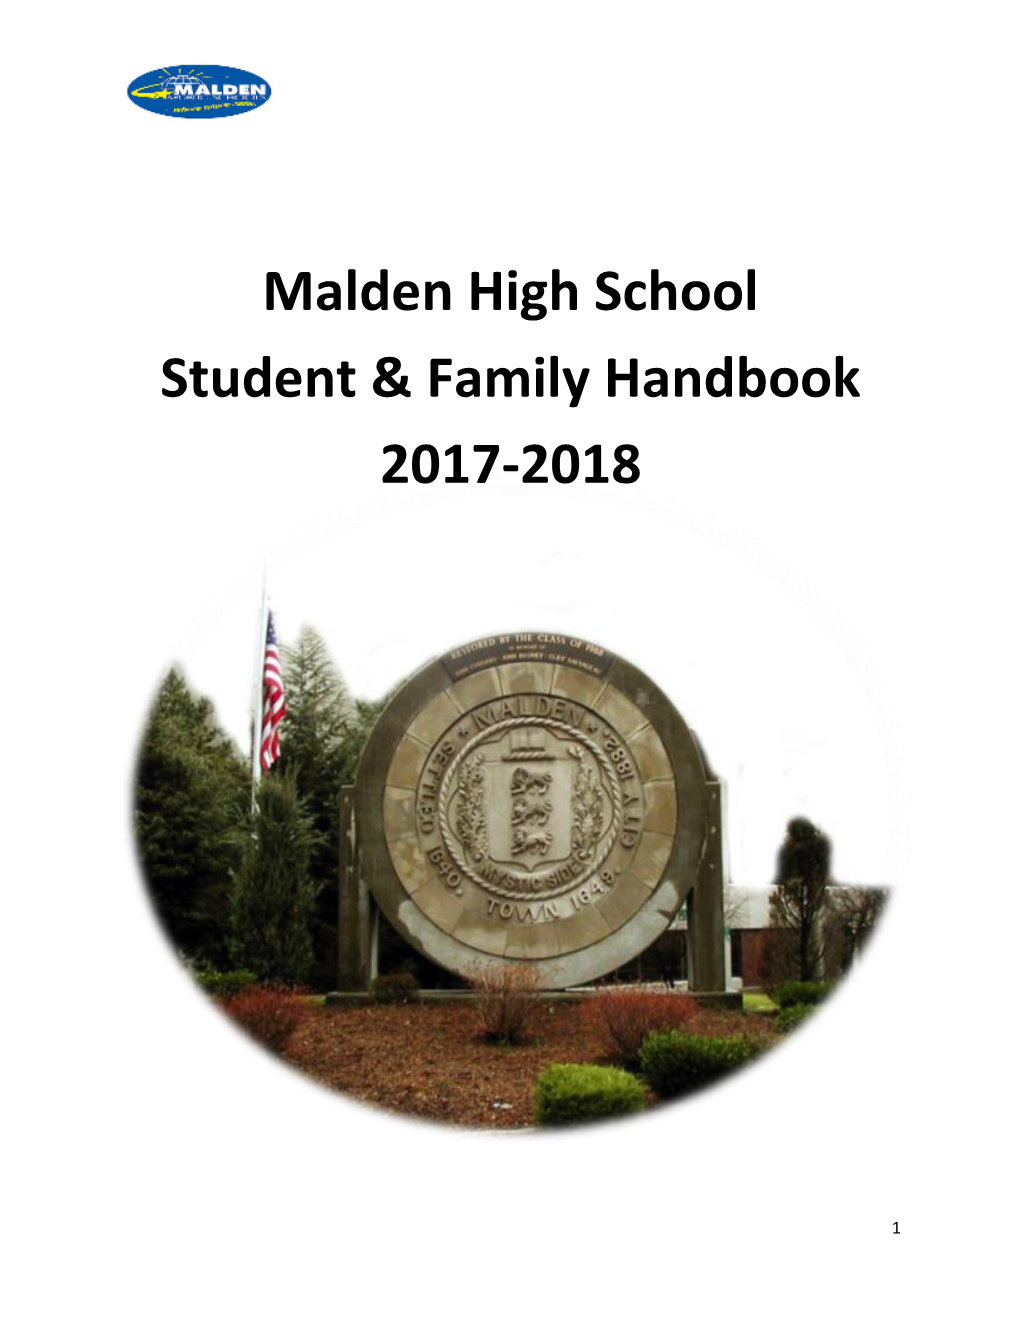 Malden High School Student & Family Handbook 2017-2018